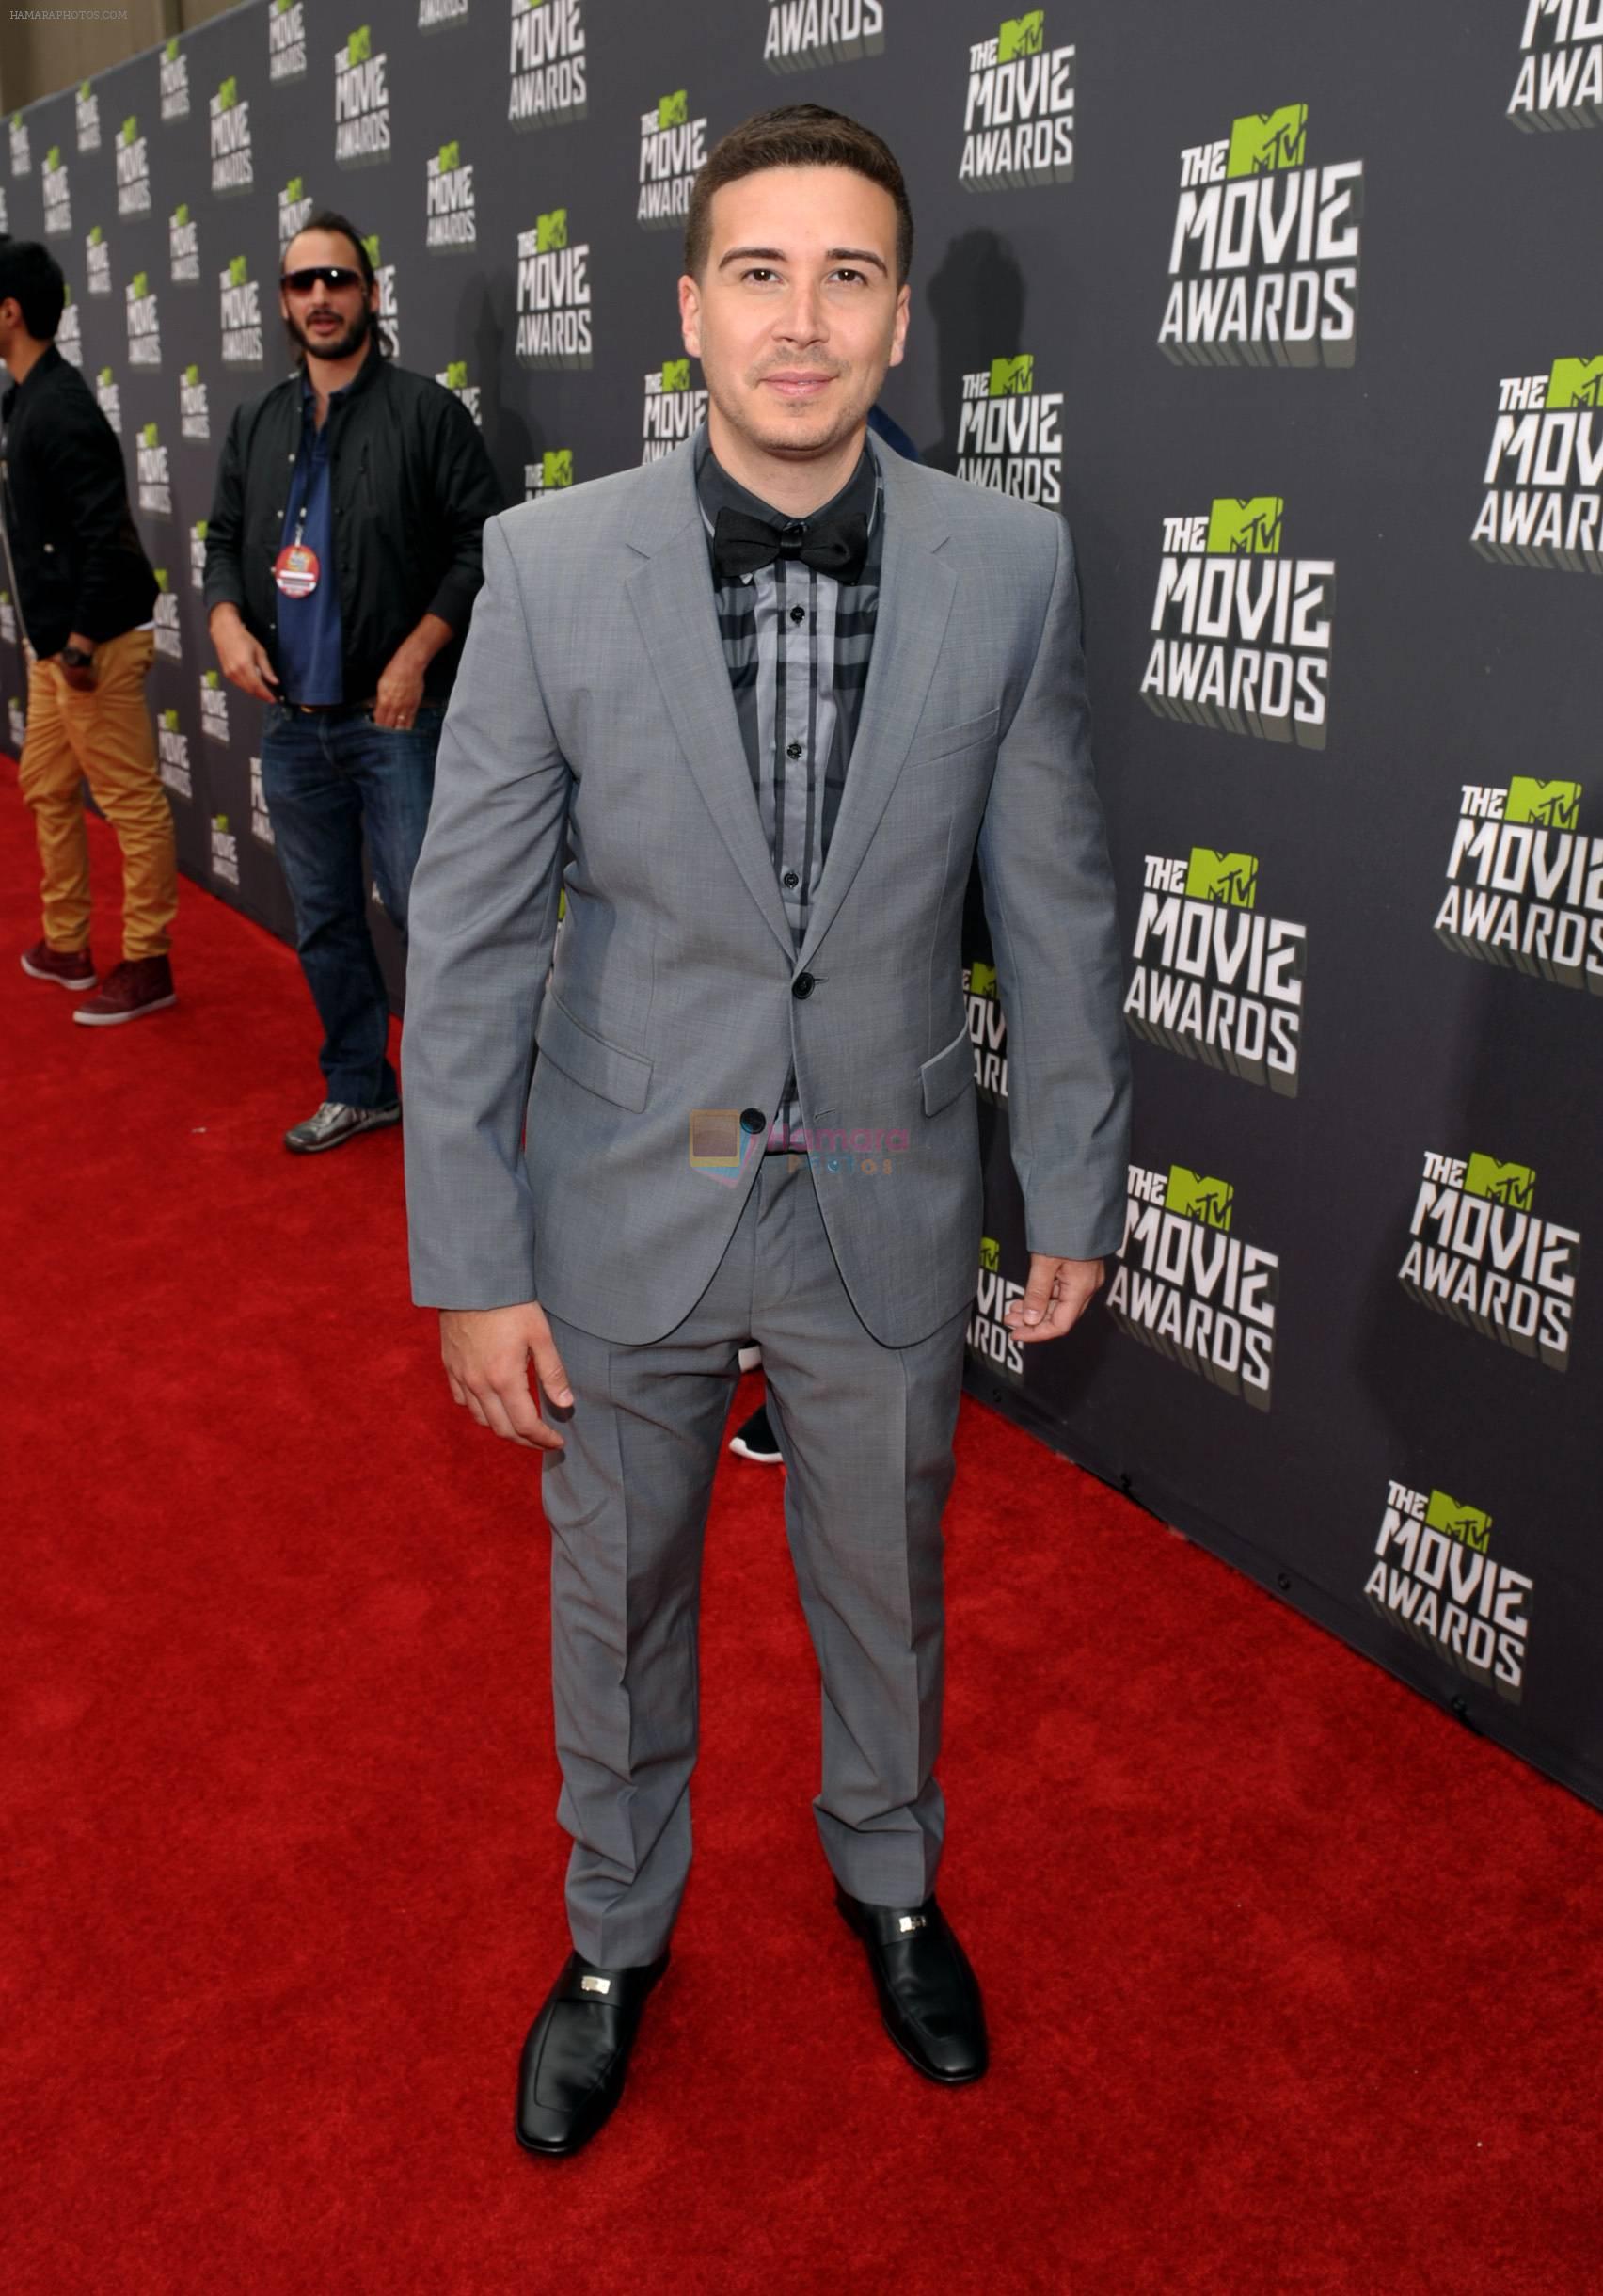 2013 MTV MOVIE AWARDS in Culver City, CA on 14th April 2013